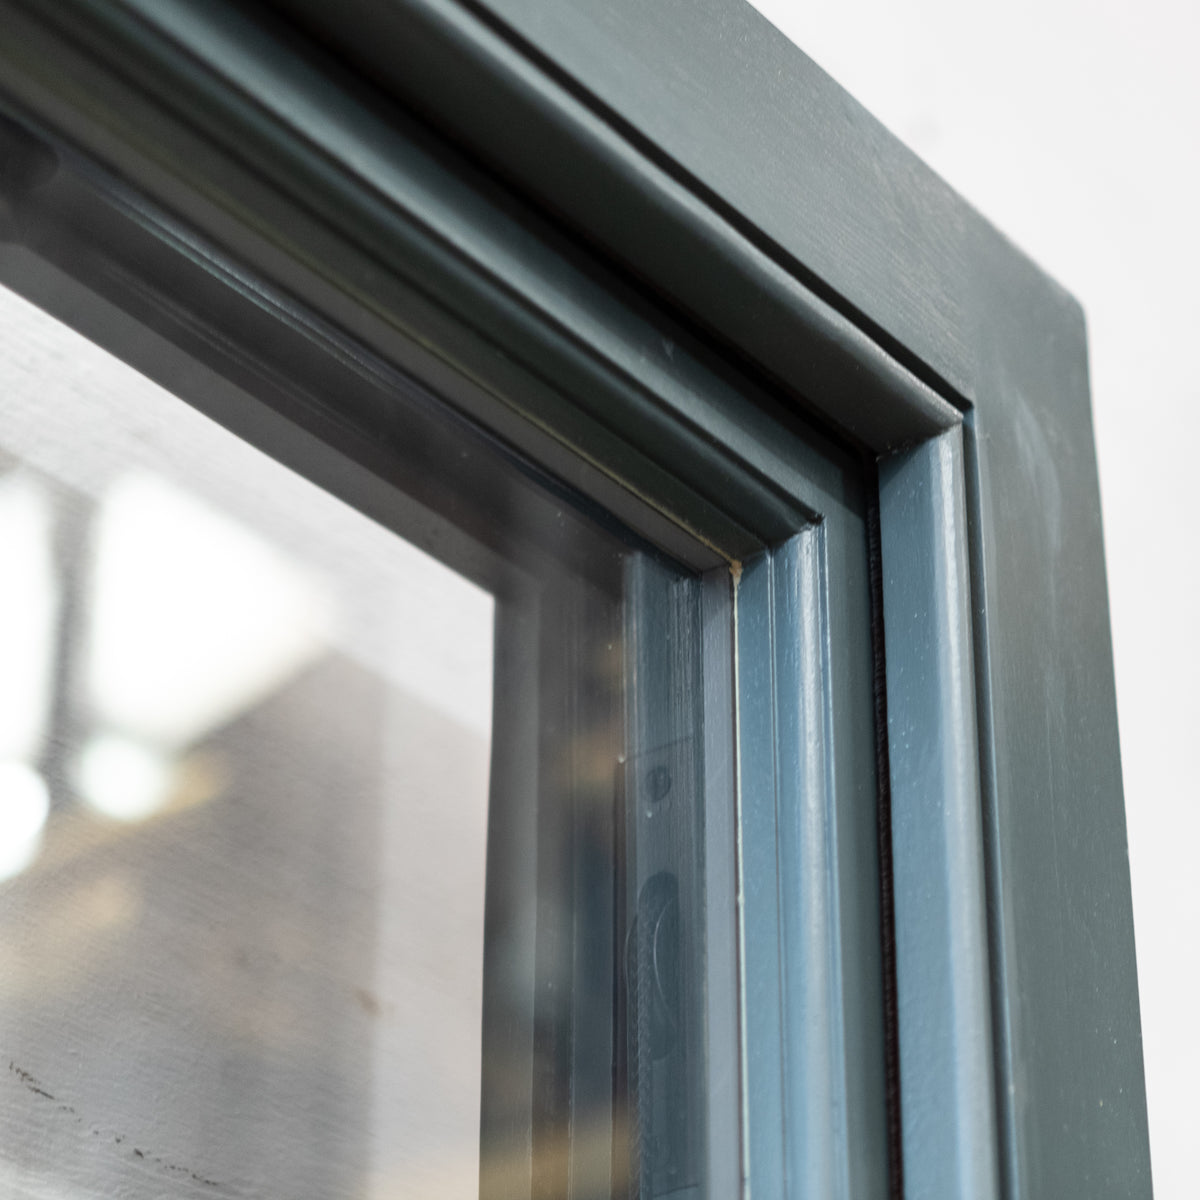 New Slimlite Double Glazed Georgian Sash Window Unit (210cm x 79.5cm) | The Architectural Forum